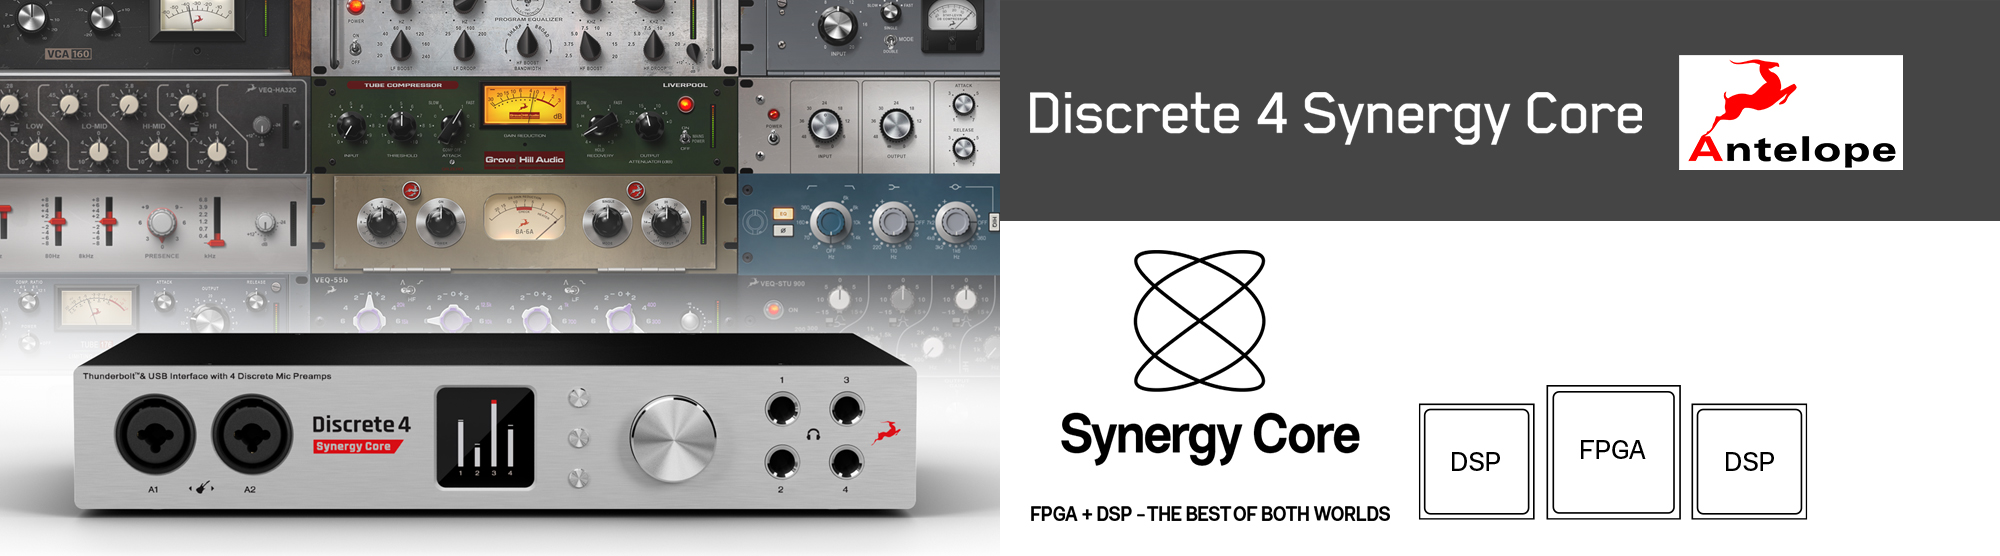 Discrete 4 Synergy Core